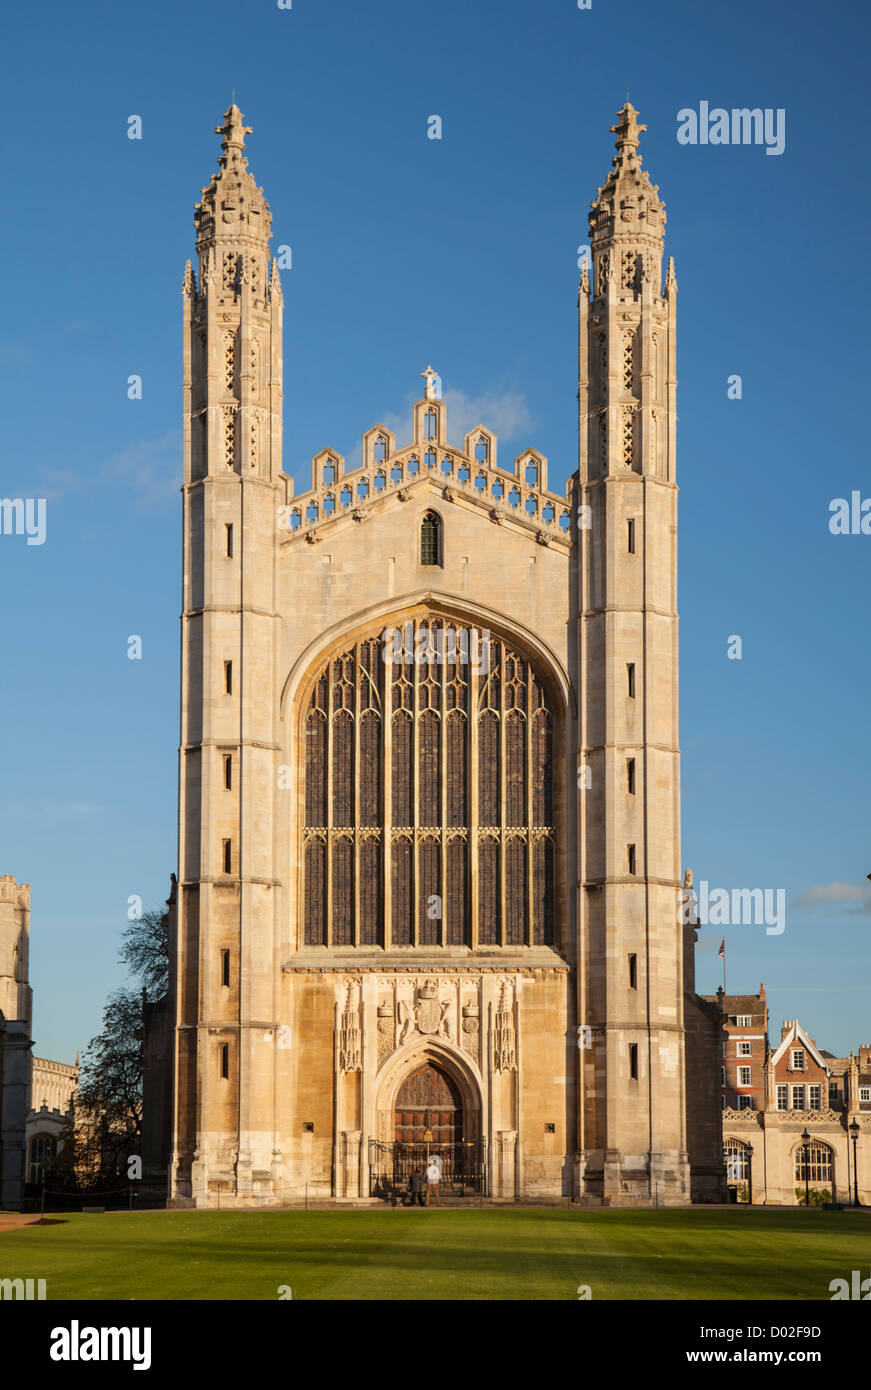 King's College Cambridge University education Stock Photo